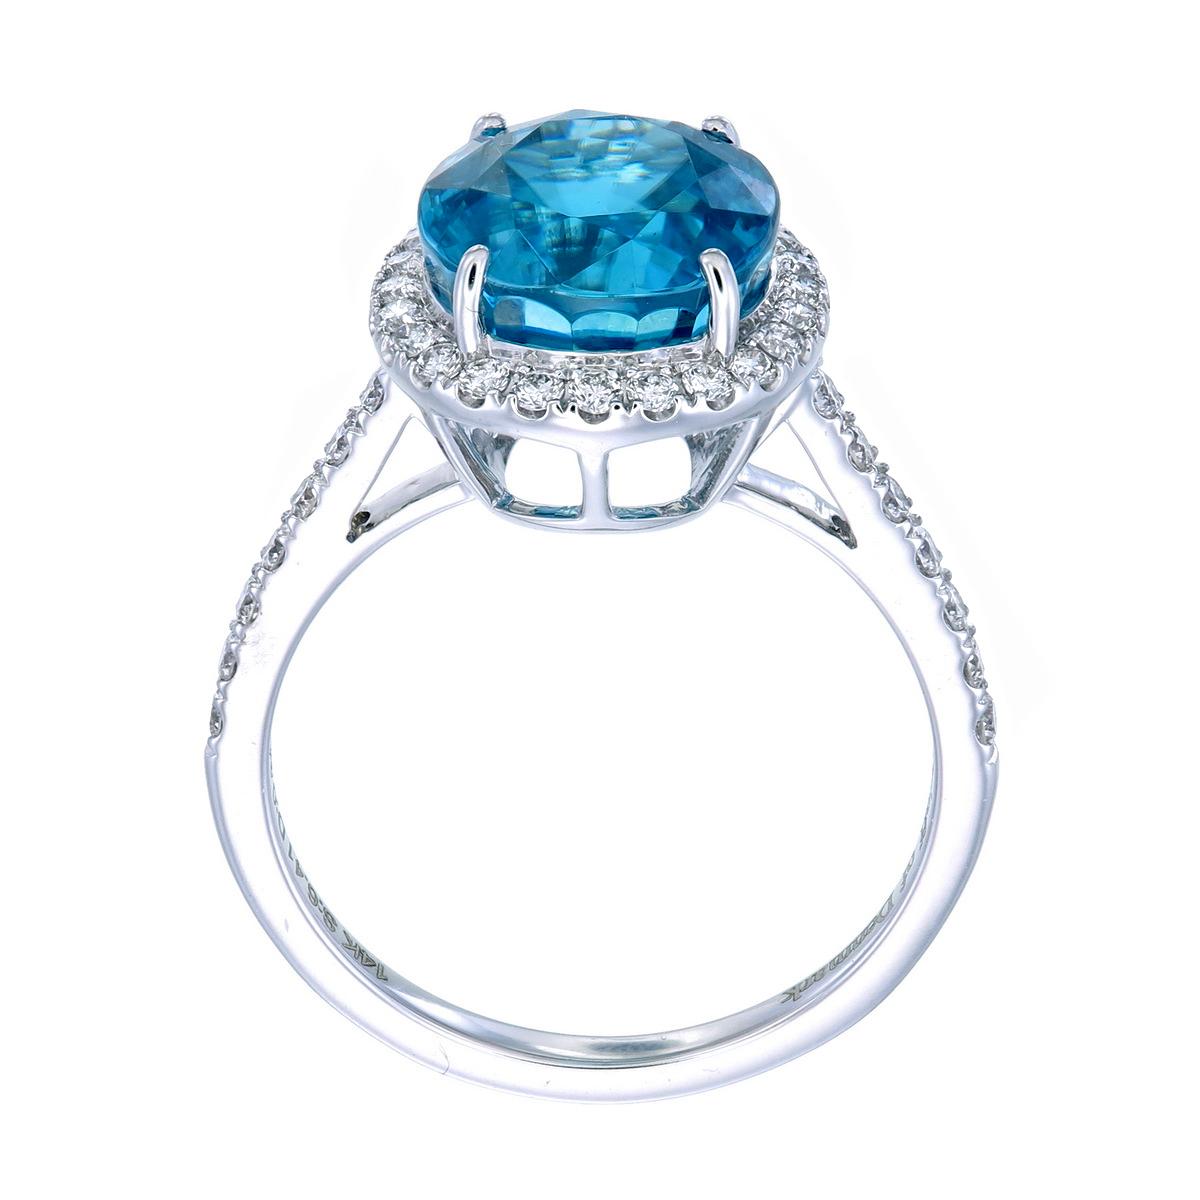 Oval Cut Orloff of Denmark, 6.41 ct Blue Zircon Diamond Engagement Ring in 14K White Gold